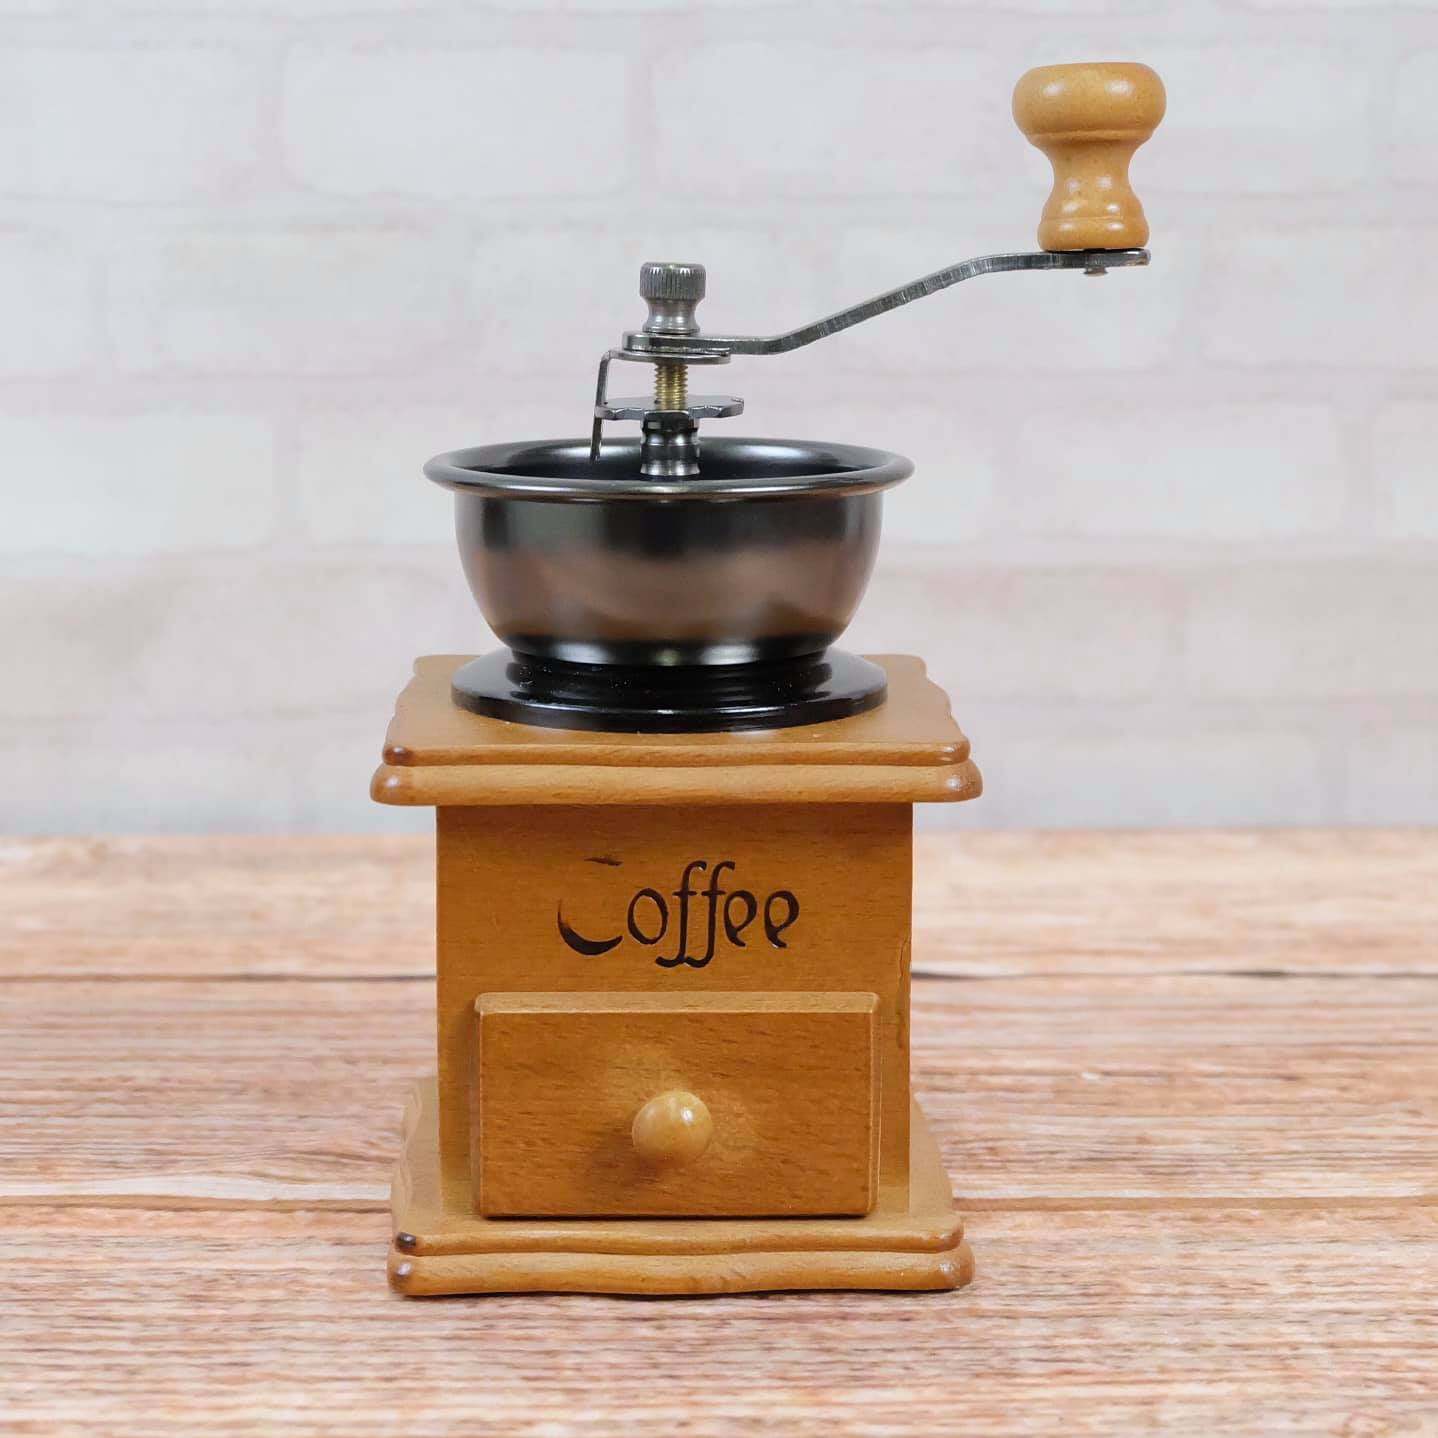 Gion - เครื่องบดเมล็ดกาแฟ เครื่องบดกาแฟ Coffee Grinder แบบมือหมุน สแตนเลส (กล่องไม้คลาสสิค)